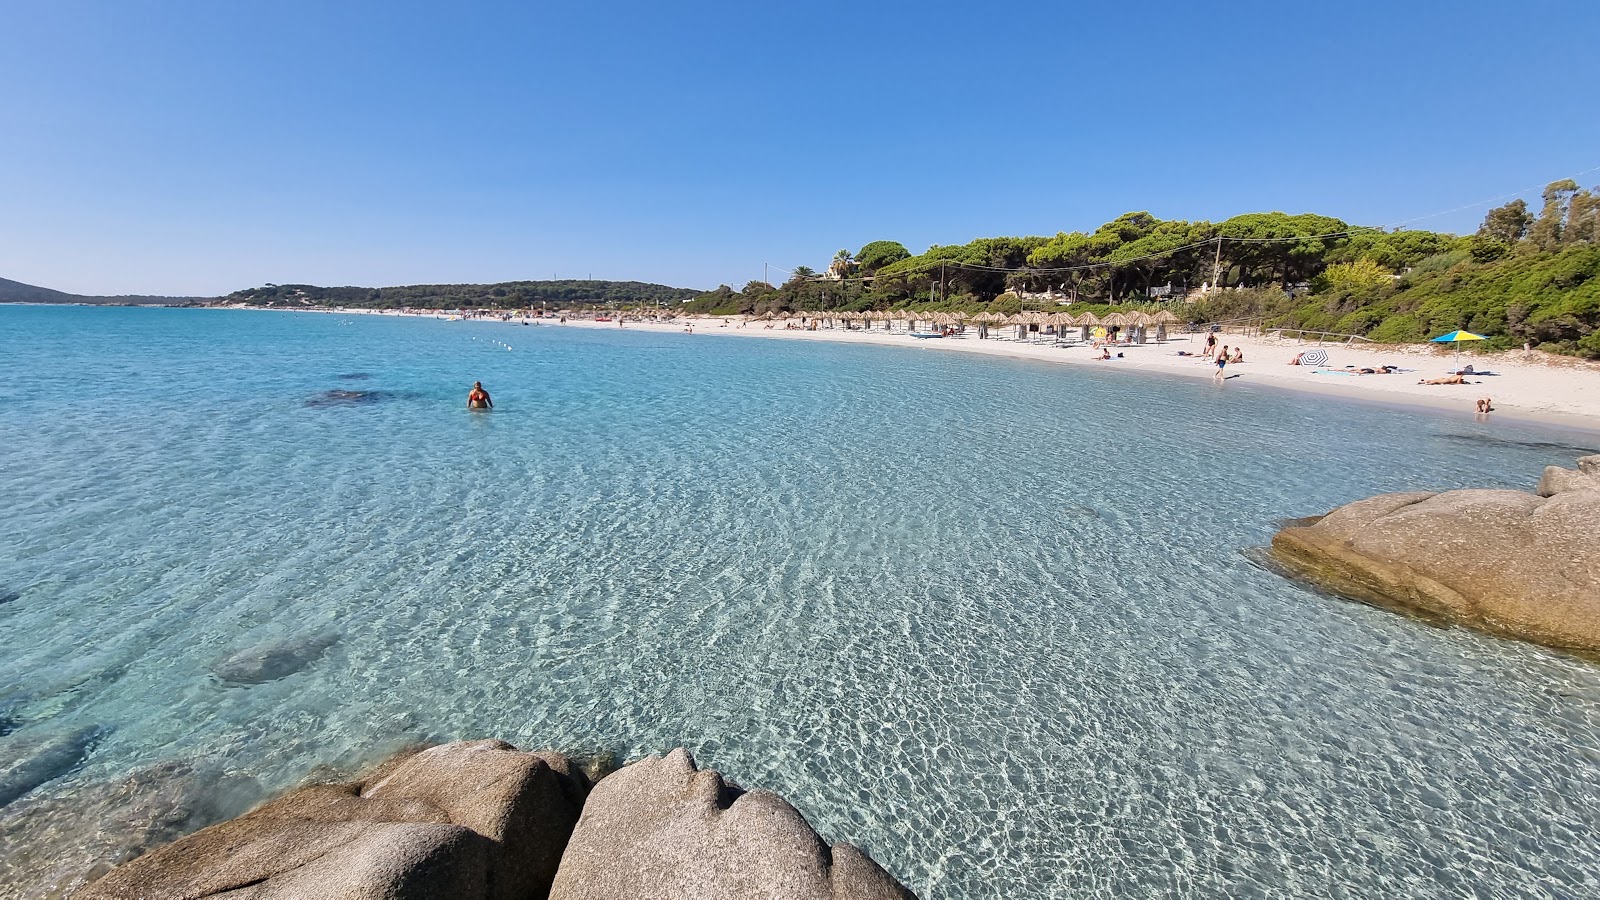 Foto av Spiaggia di Simius med hög nivå av renlighet